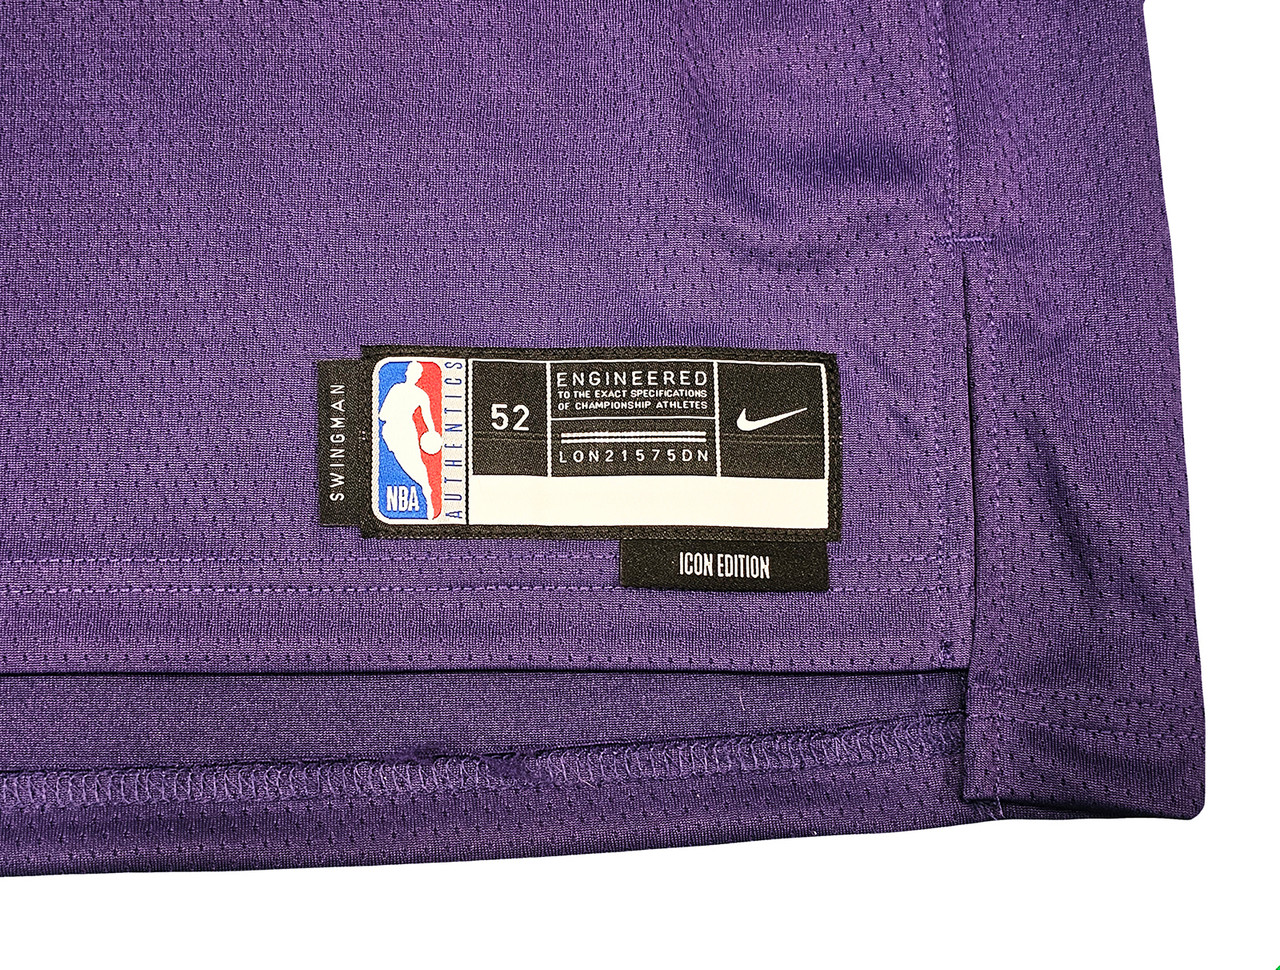 Kevin Durant Phoenix Suns Autographed Purple Nike Icon Swingman Jersey